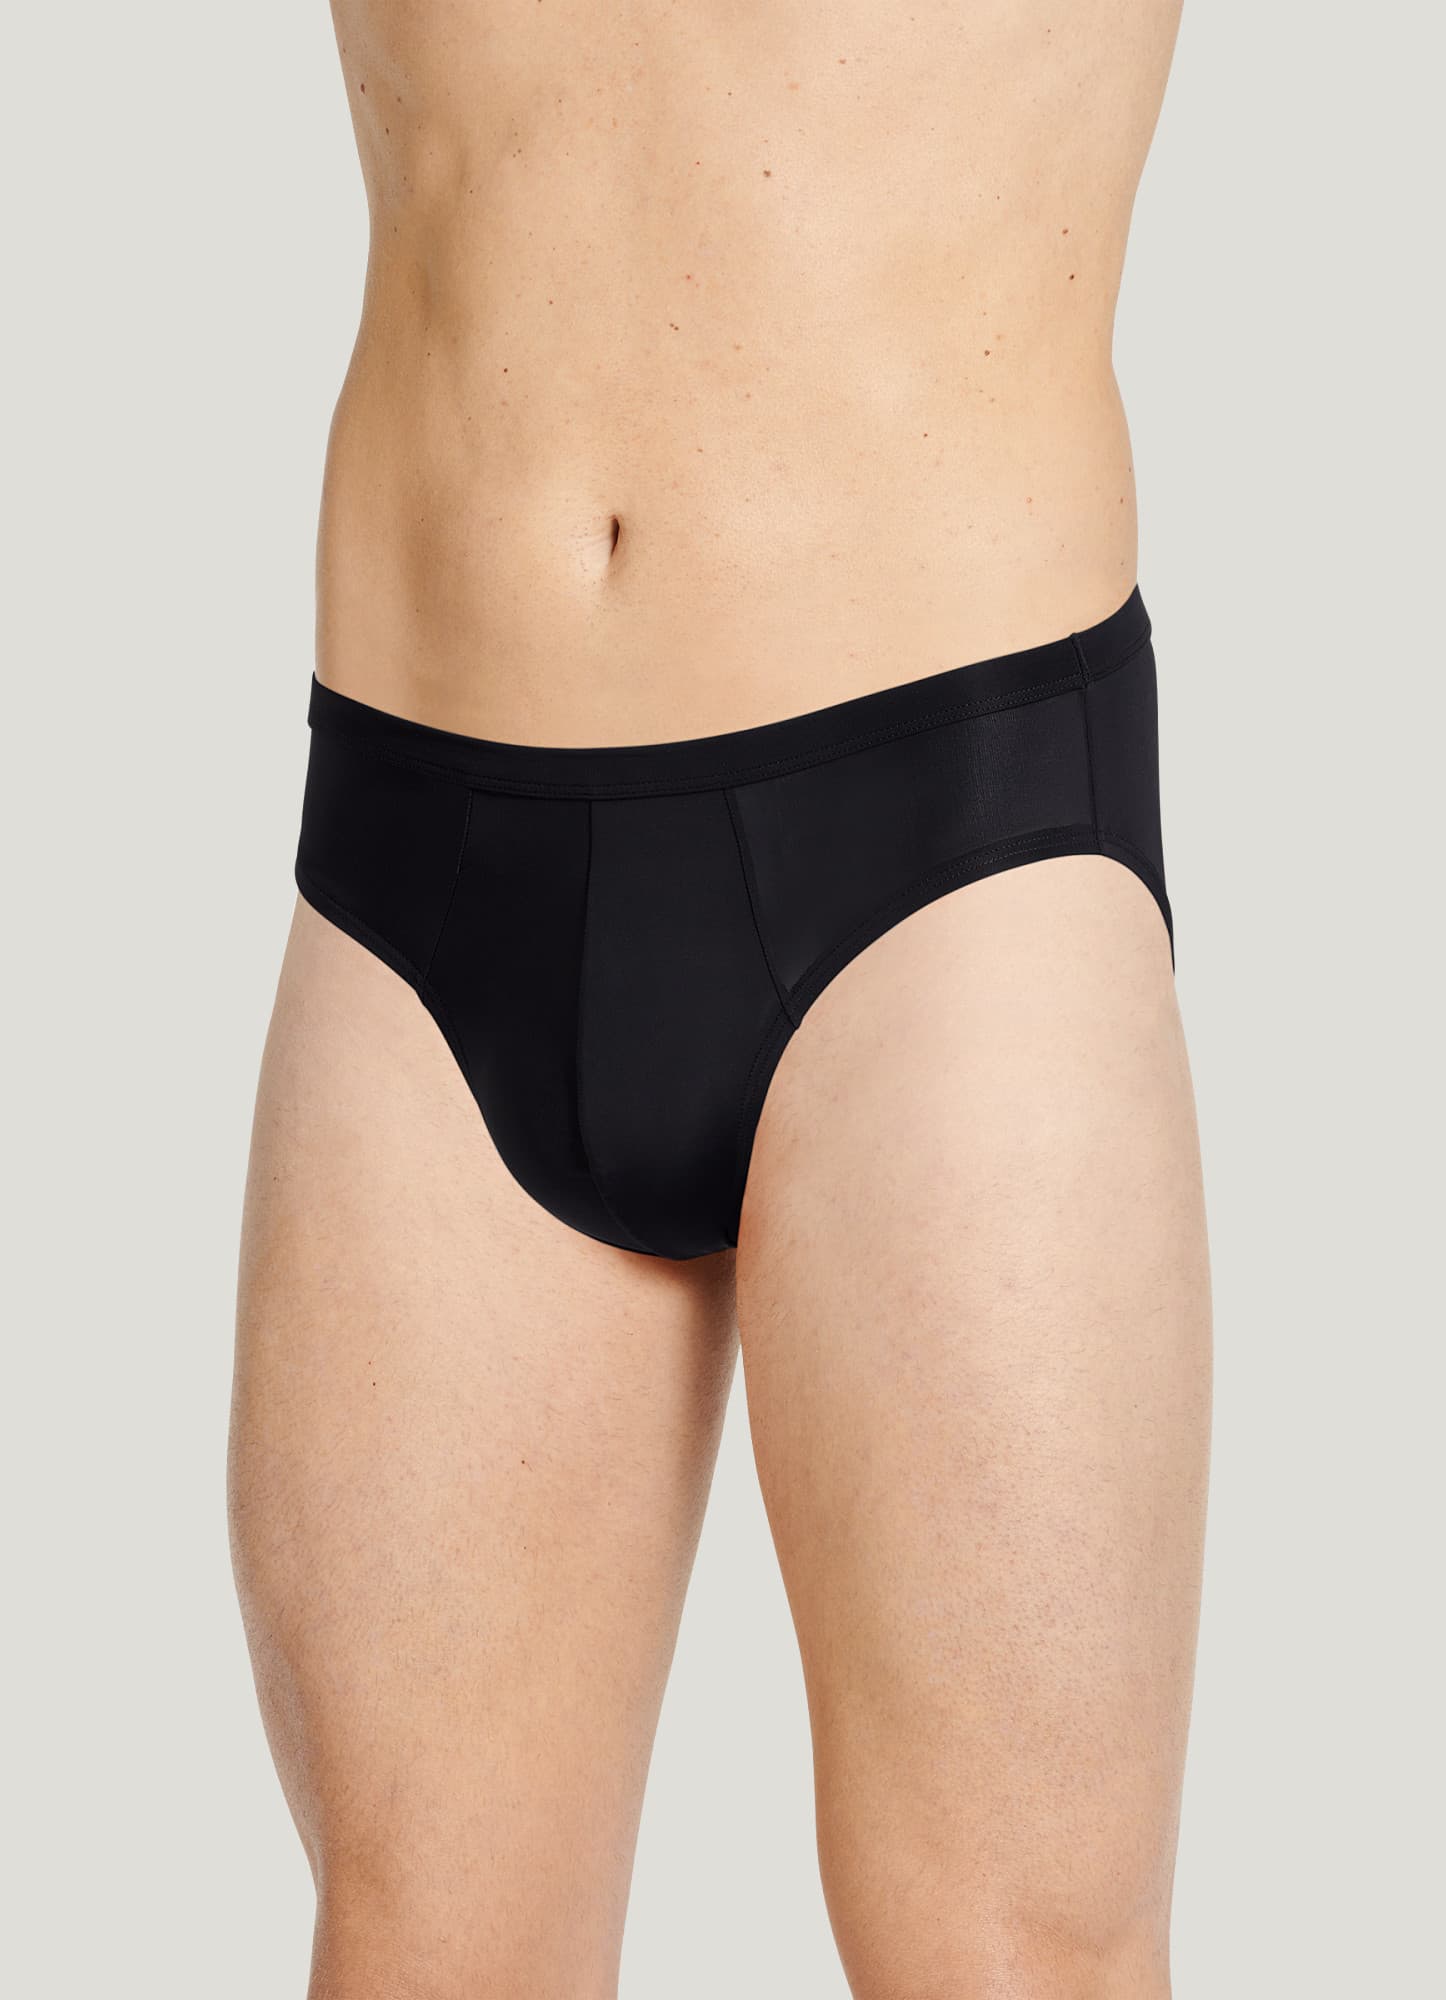 Jockey Men's Underwear FormFit Lightweight Seamfree Brief, Black, S at   Men's Clothing store